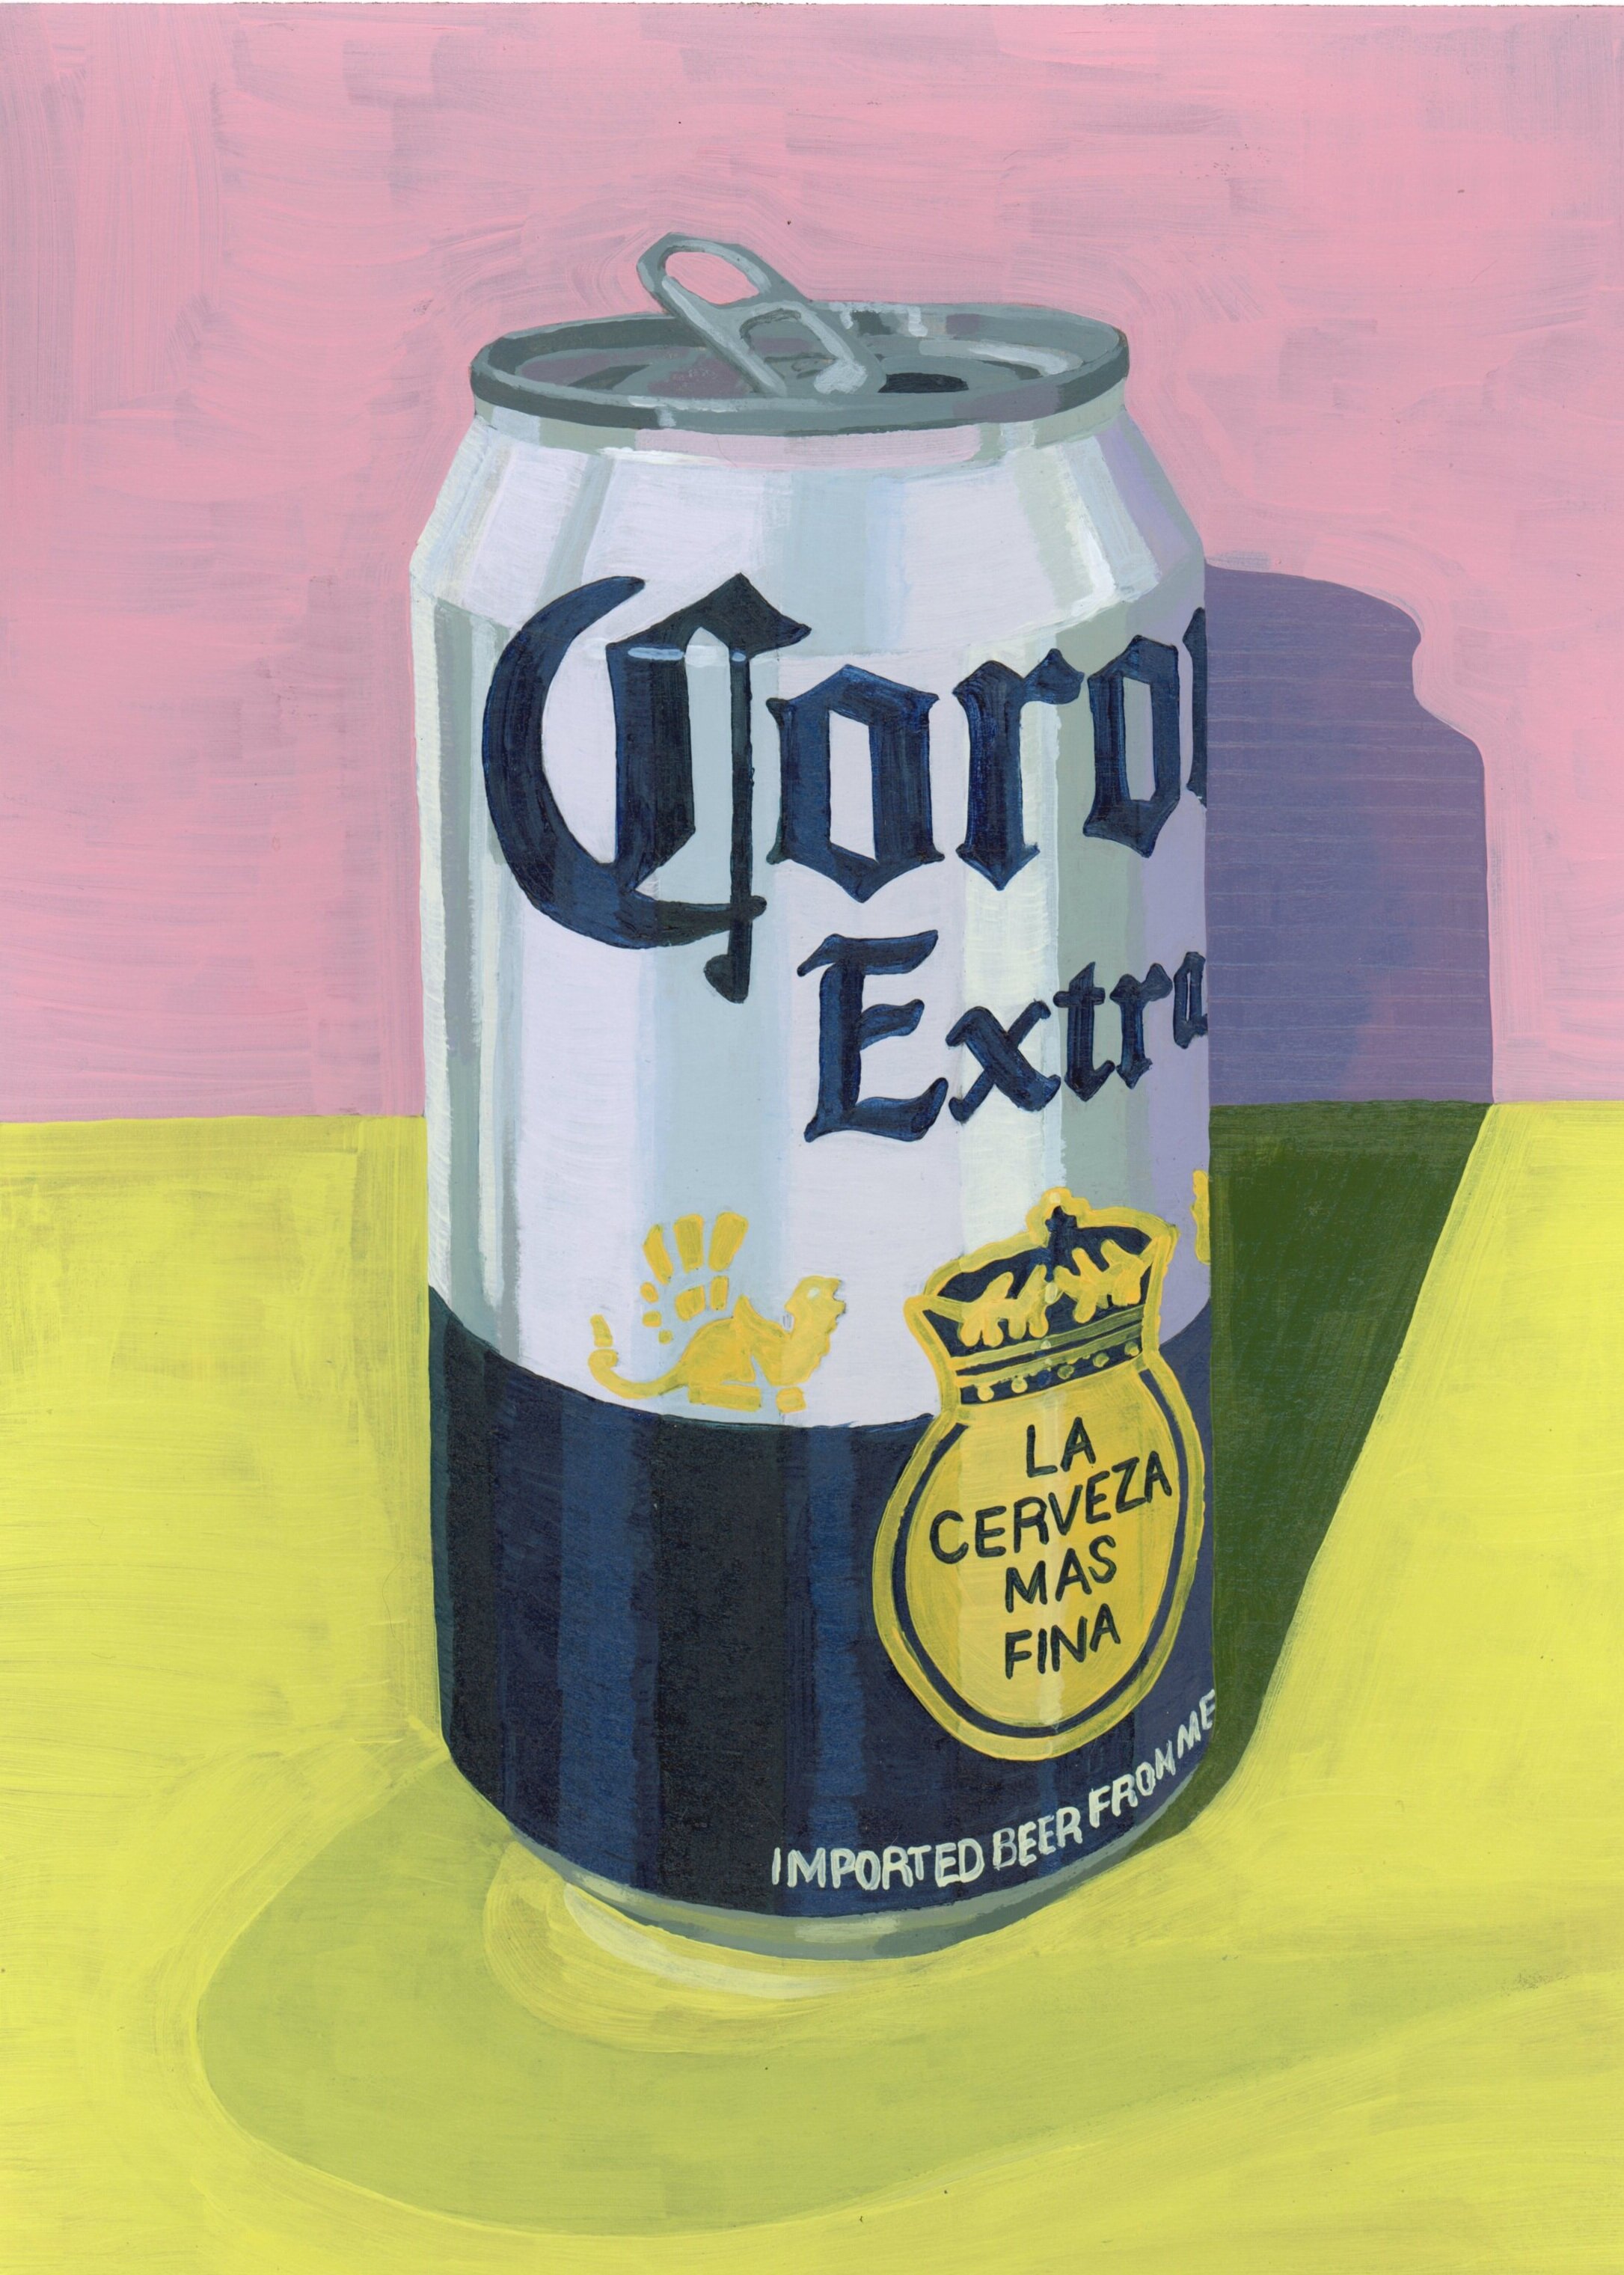   Corona   Acrylic on Paper   7 x 10 in.  2020   SOLD  